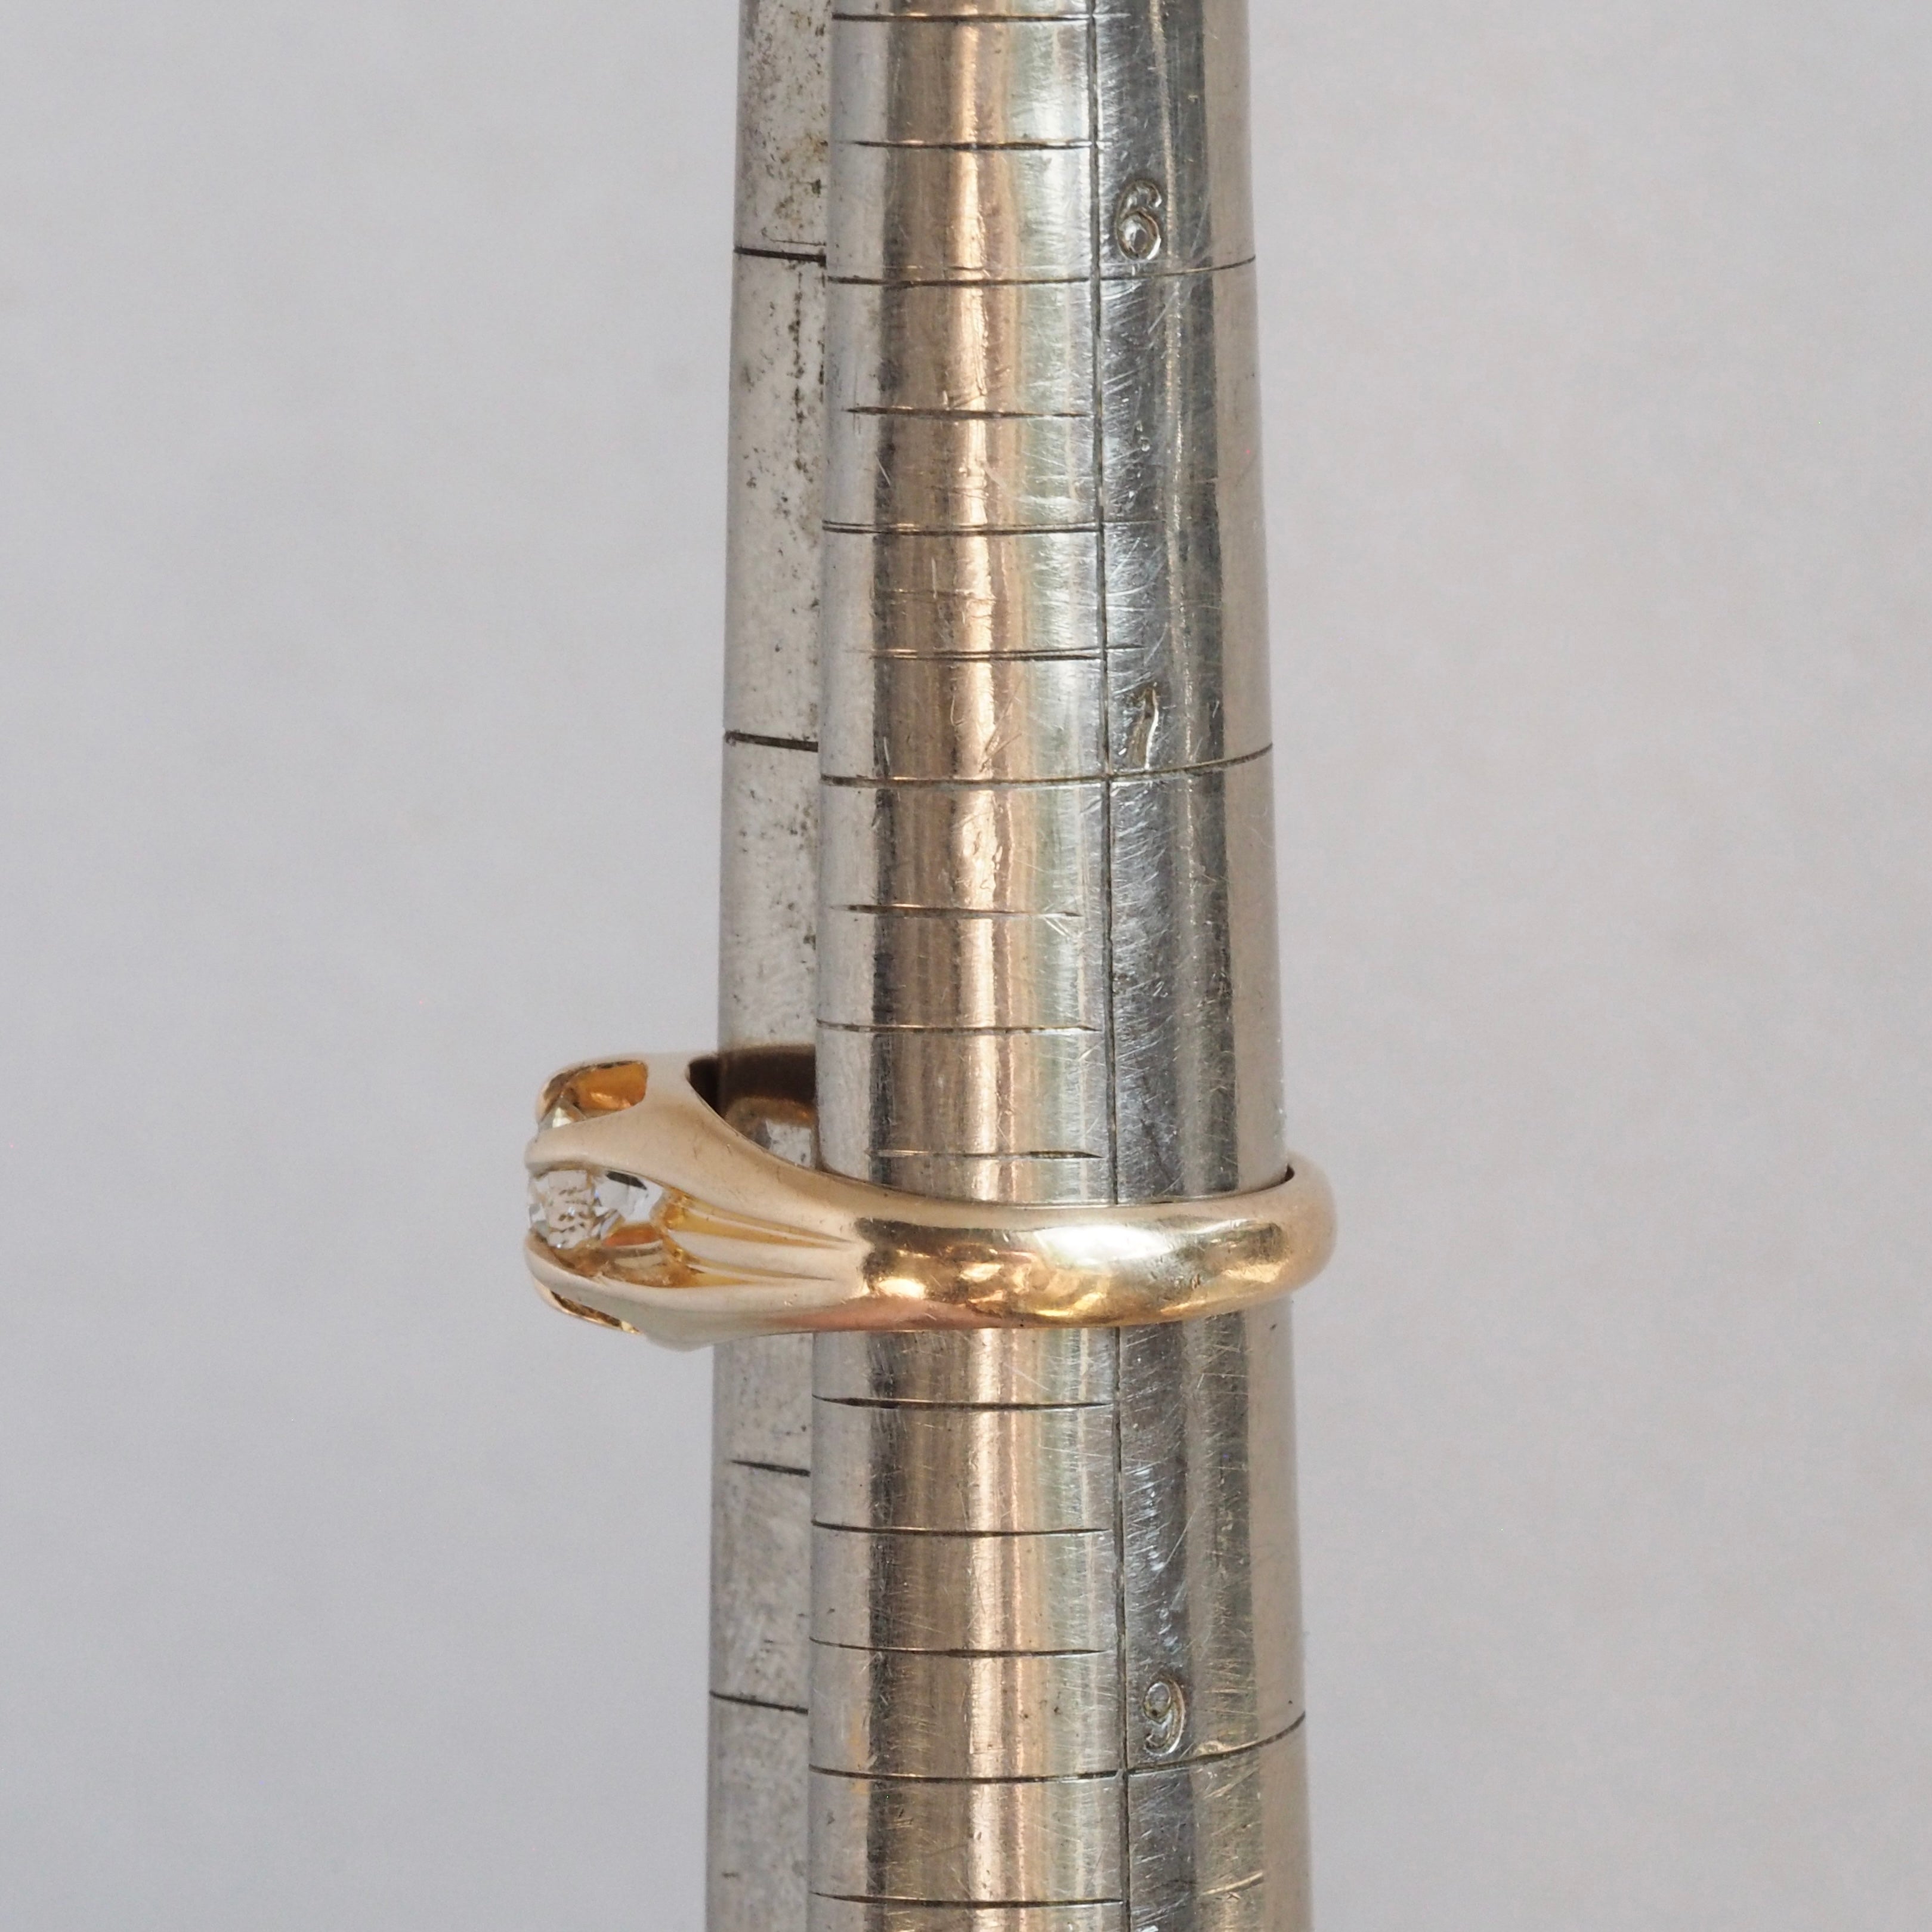 Antique 14k Gold Transitional Diamond Belcher Set Ring